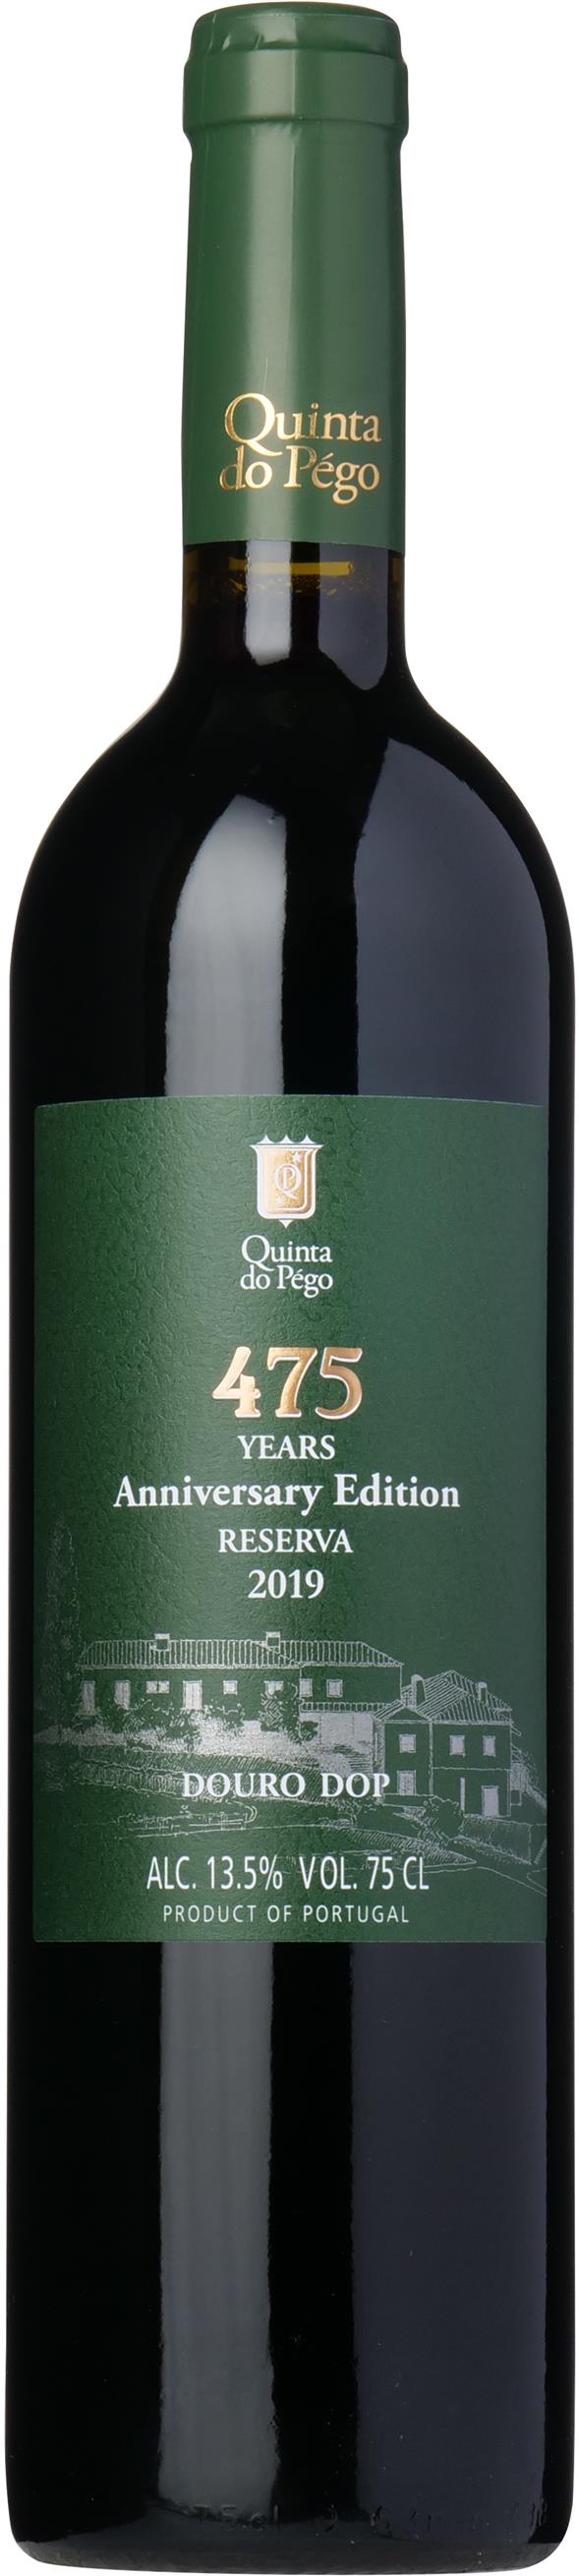 Quinta do pégo 2019 - 475 years anniversary edition 2019